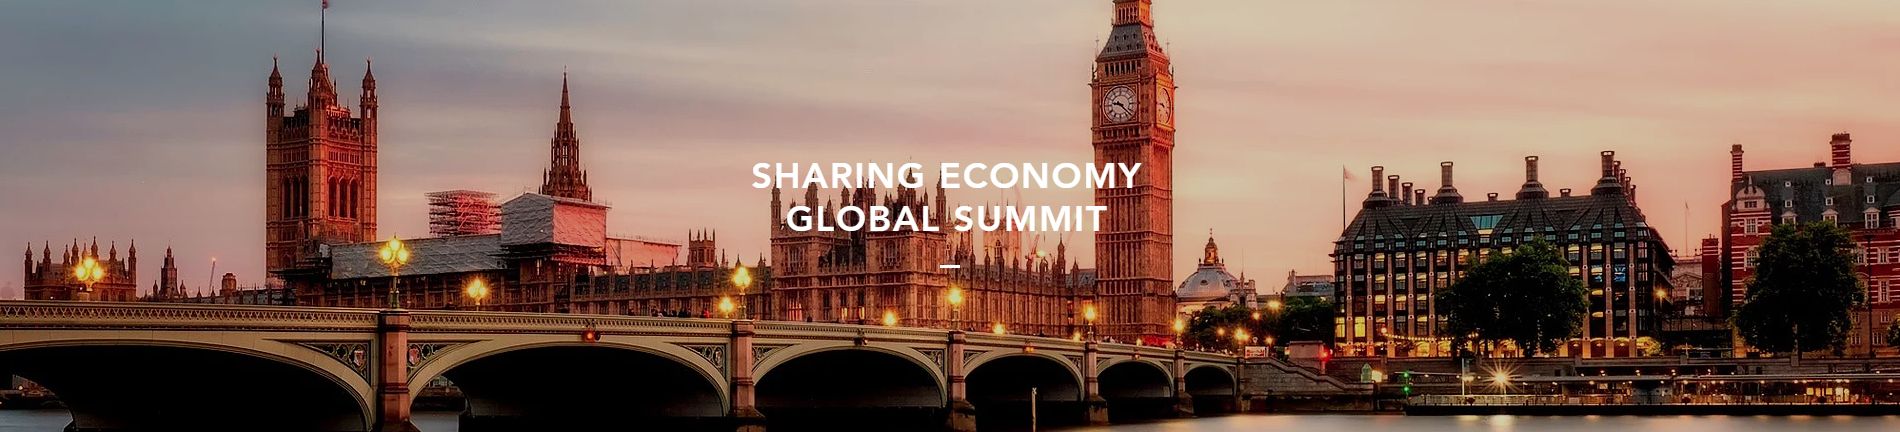 sharing_economy_global_summit_london